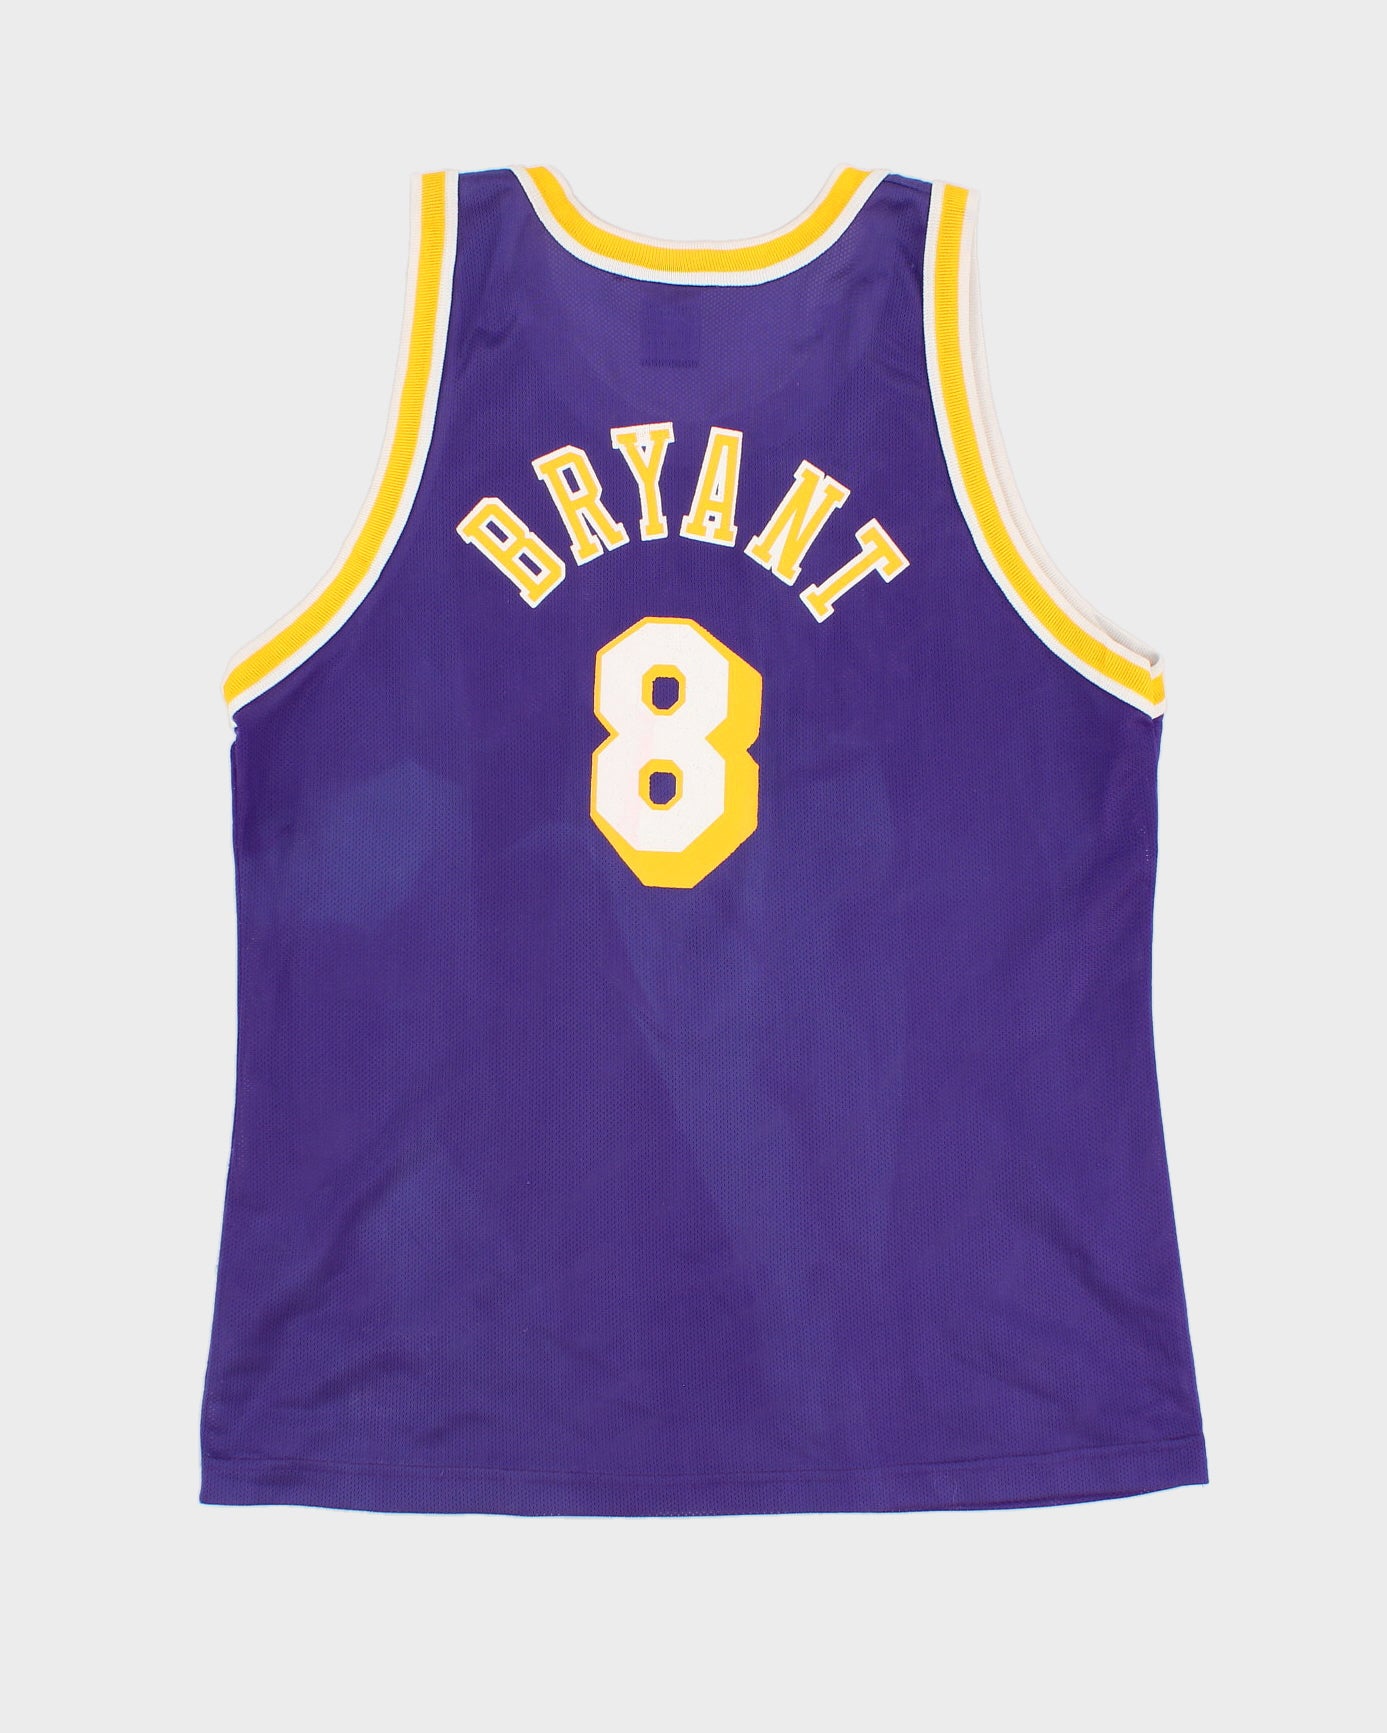 RokitLondon Vintage 90s Champion NBA x Los Angeles Lakers Kobe Bryant #8 Basketball Jersey - M